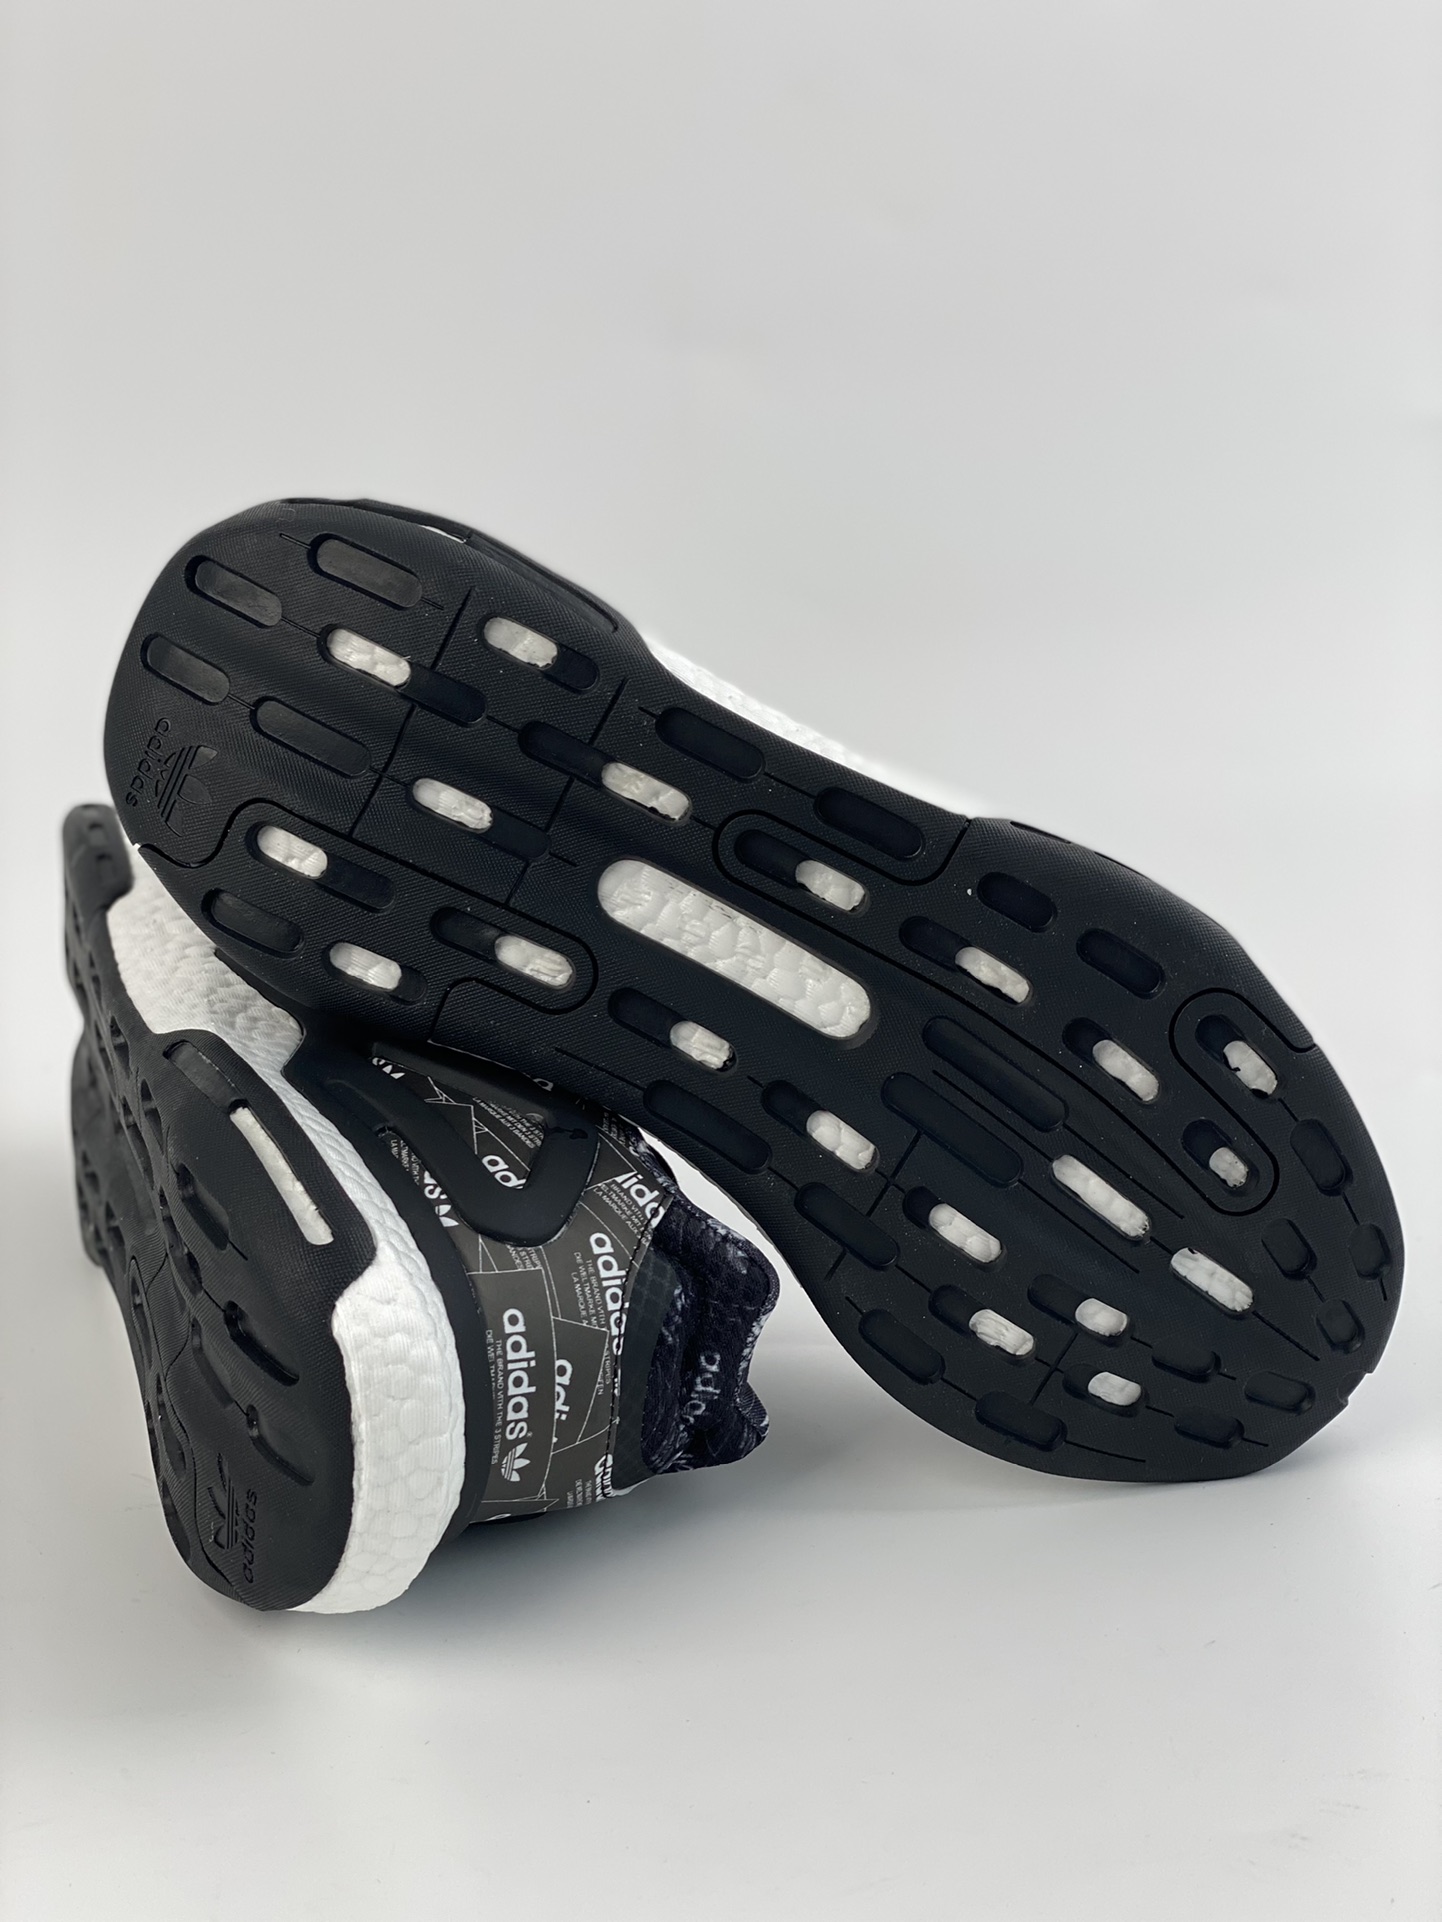 Adidas Day Jogger Night Walker 2nd Generation Get Edition FY6167